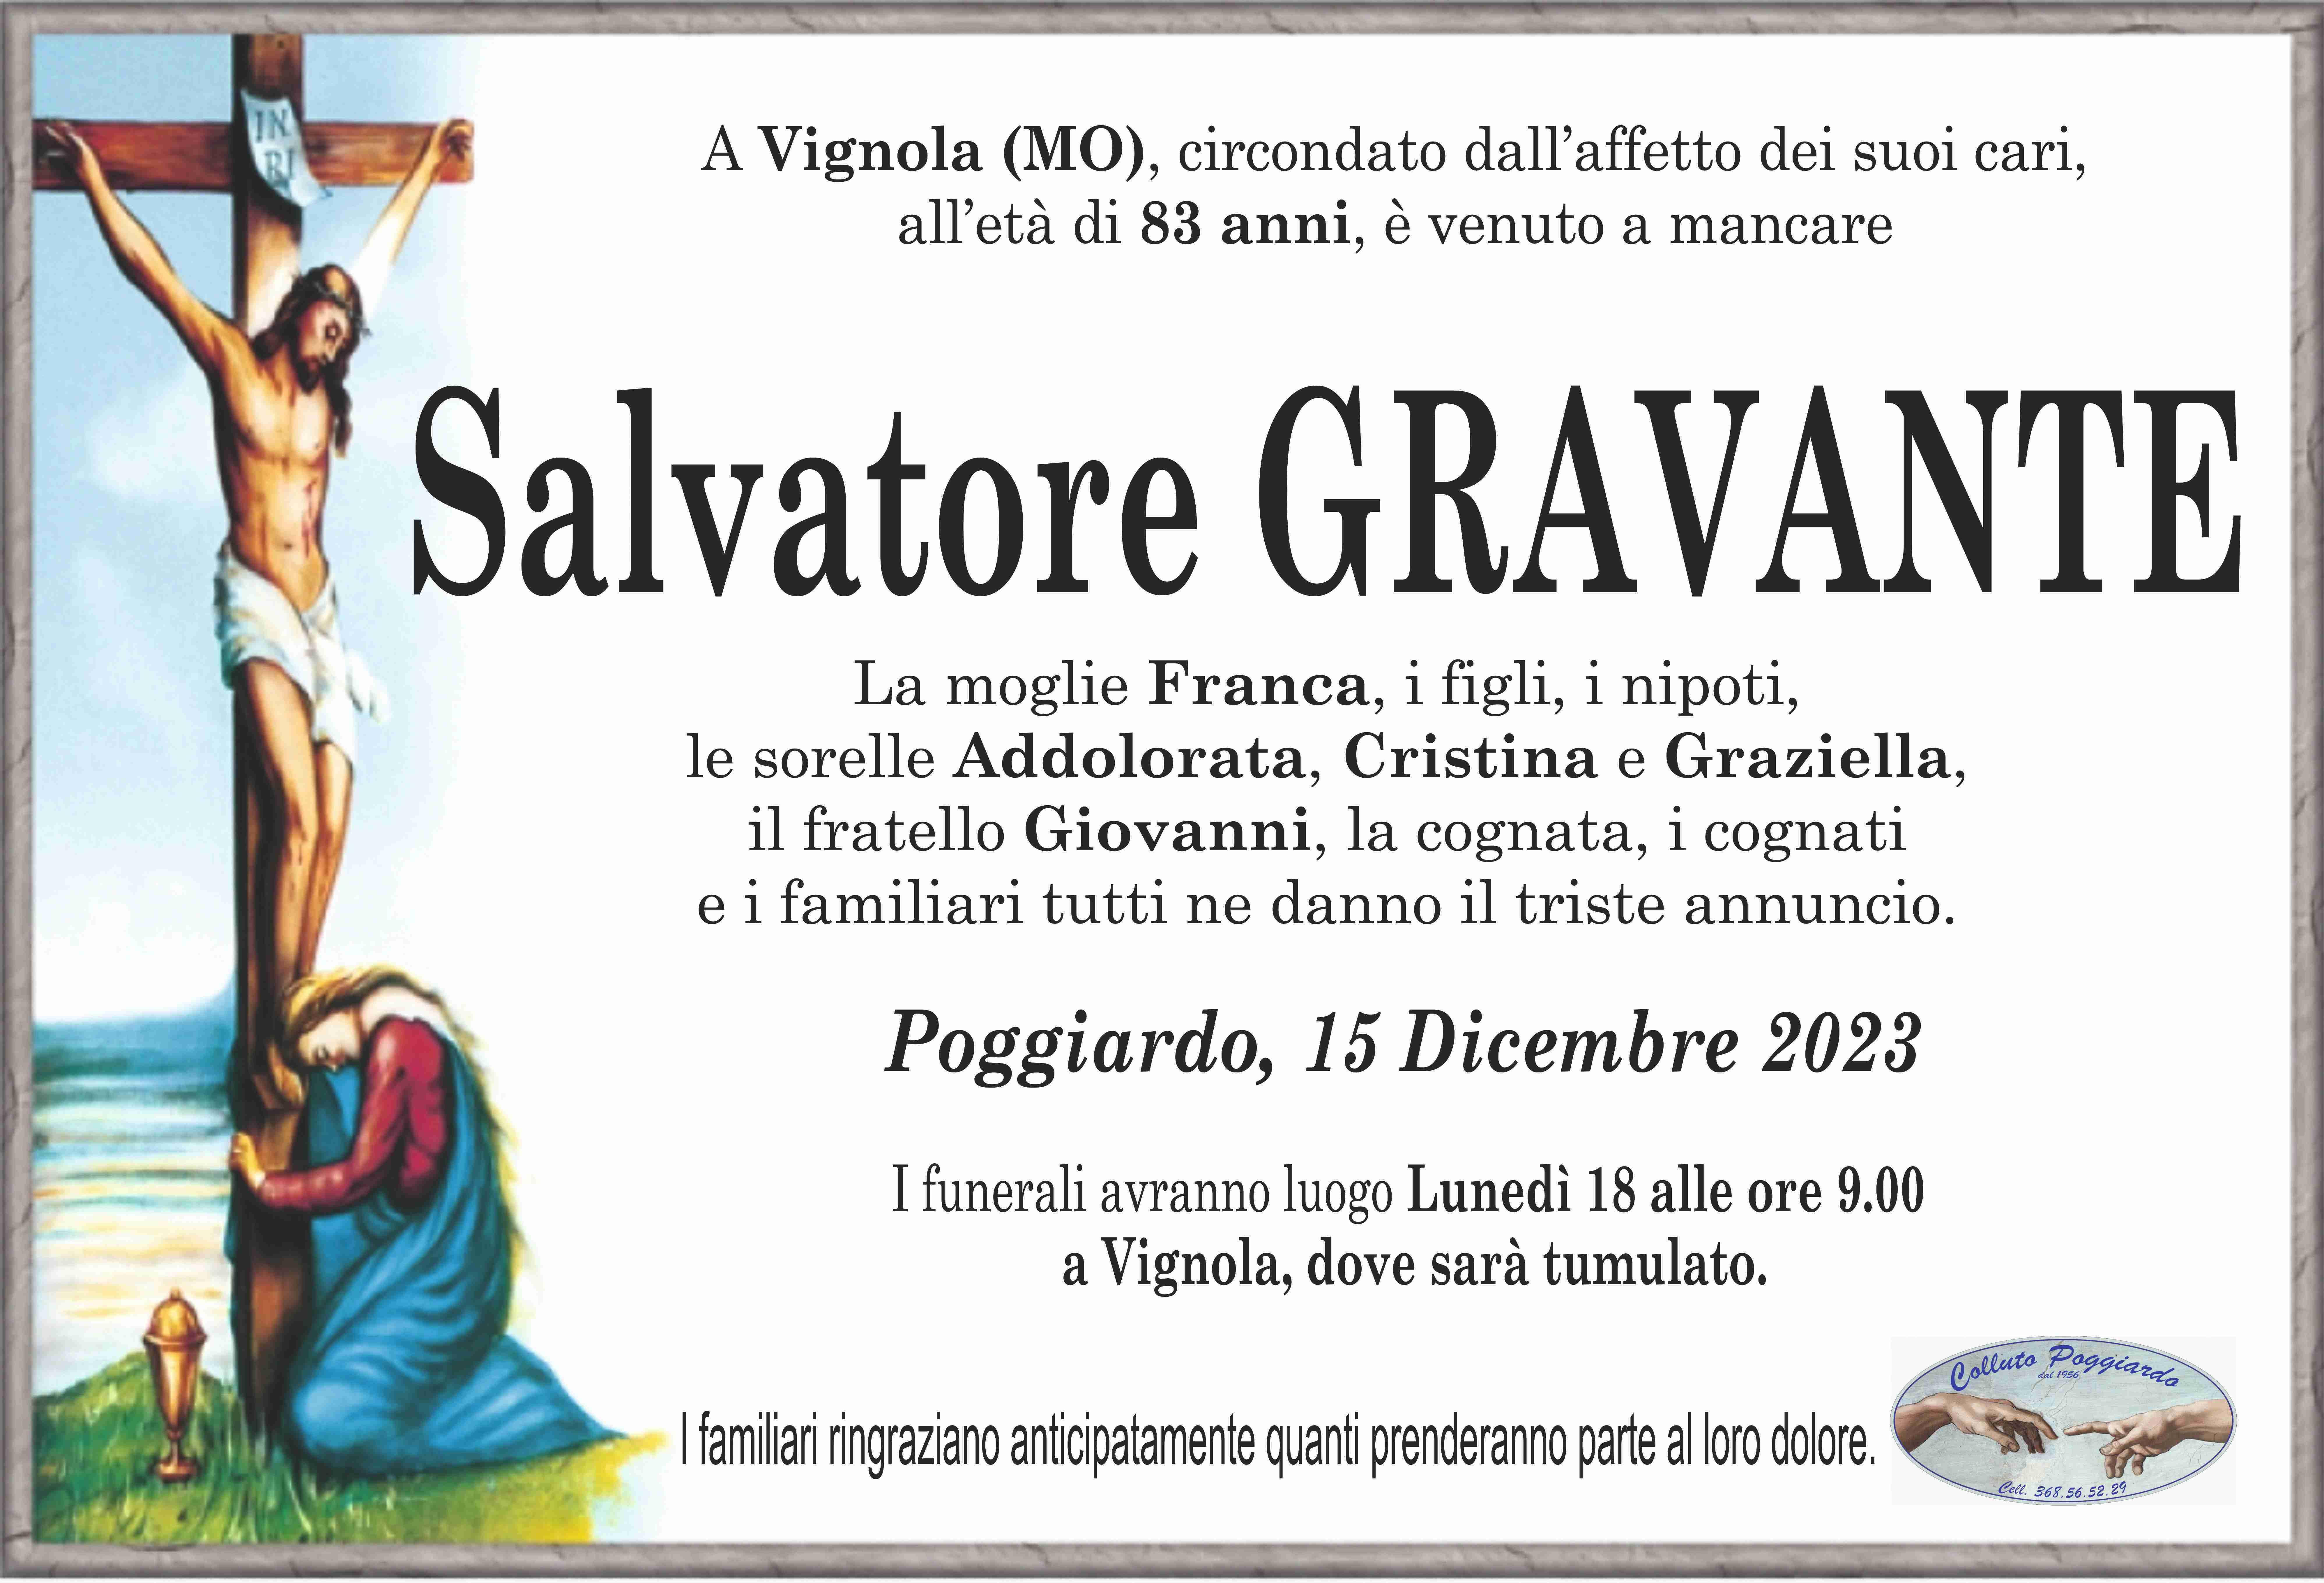 Salvatore Gravante